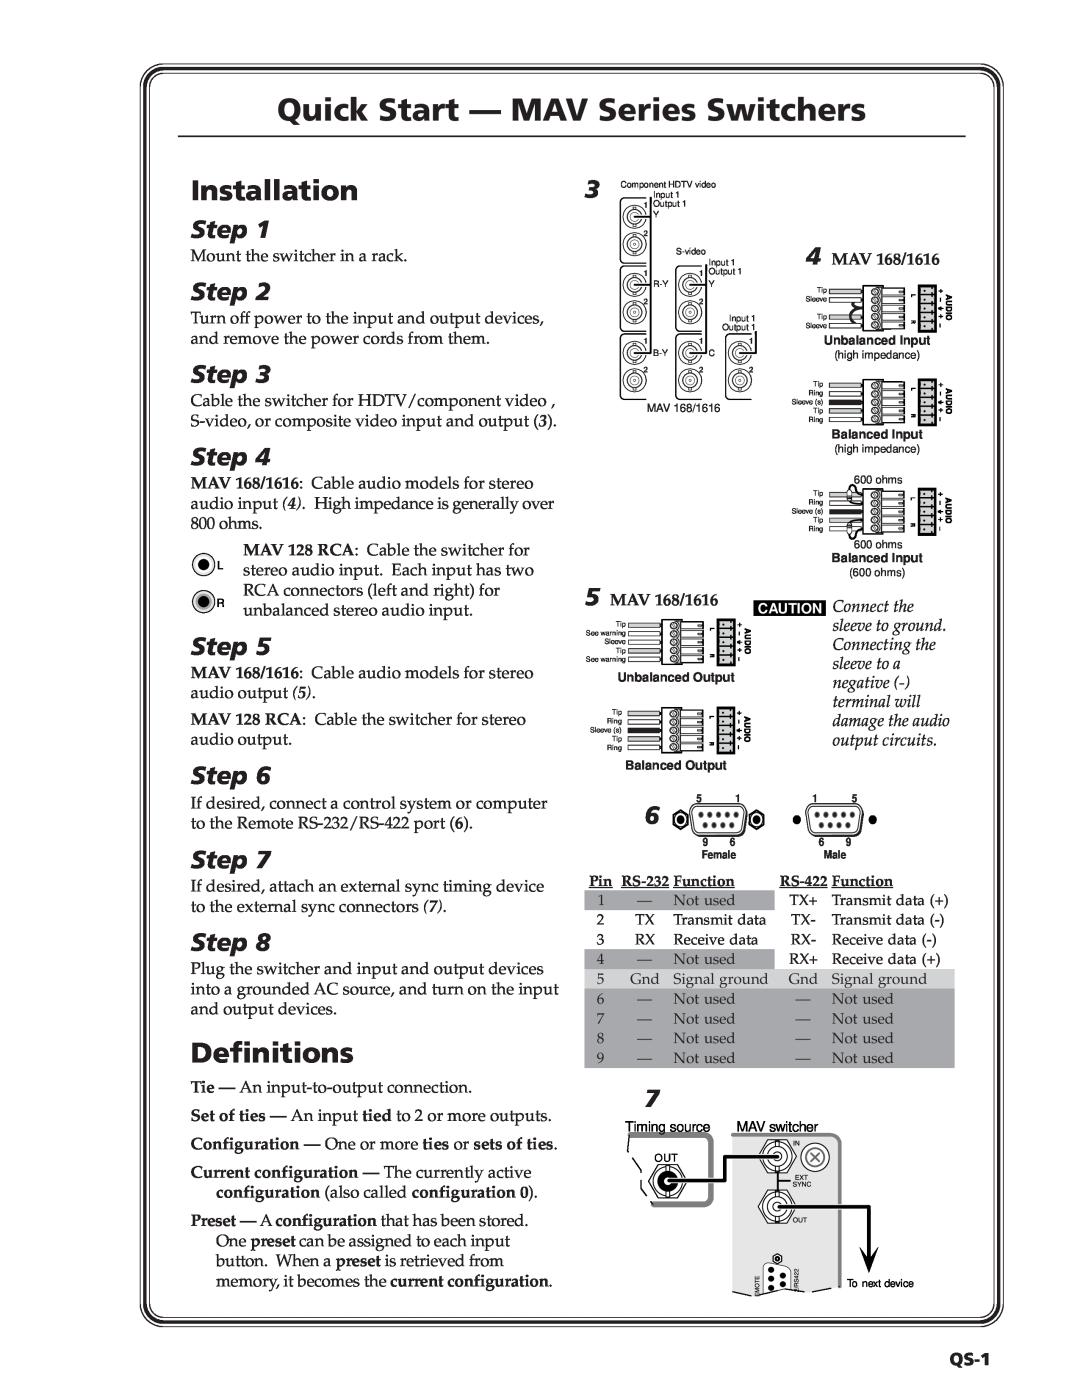 Extron electronic manual Quick Start - MAV Series Switchers, Installation, Definitions, MAV 168/1616, QS-1, Step 